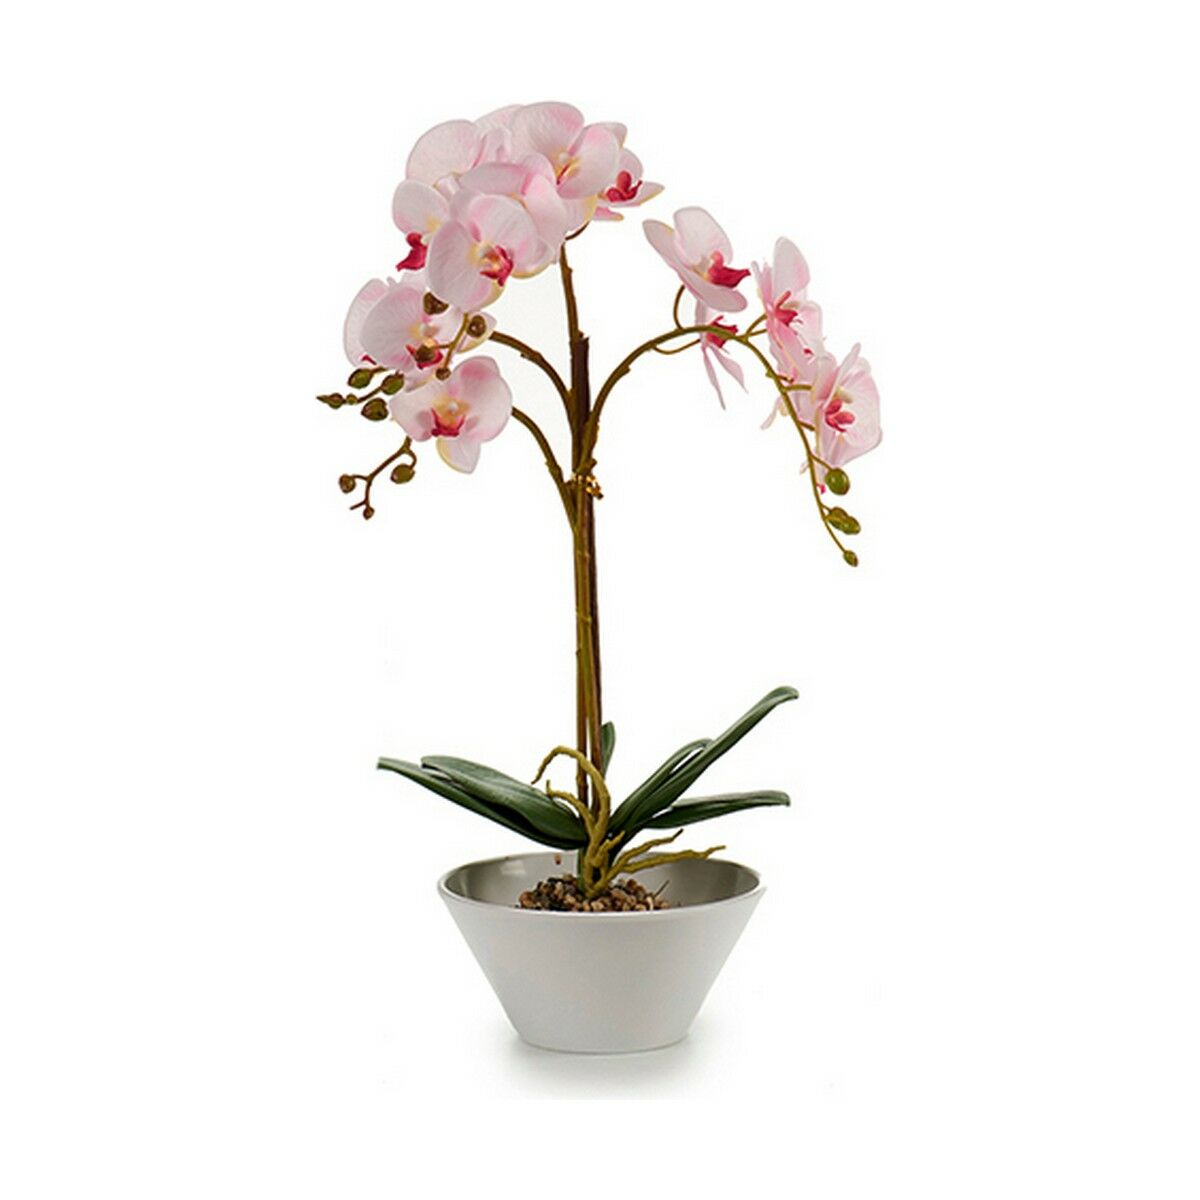 Dekorationspflanze Orchidee Kunststoff 20 x 60 x 28 cm (2 Stück)